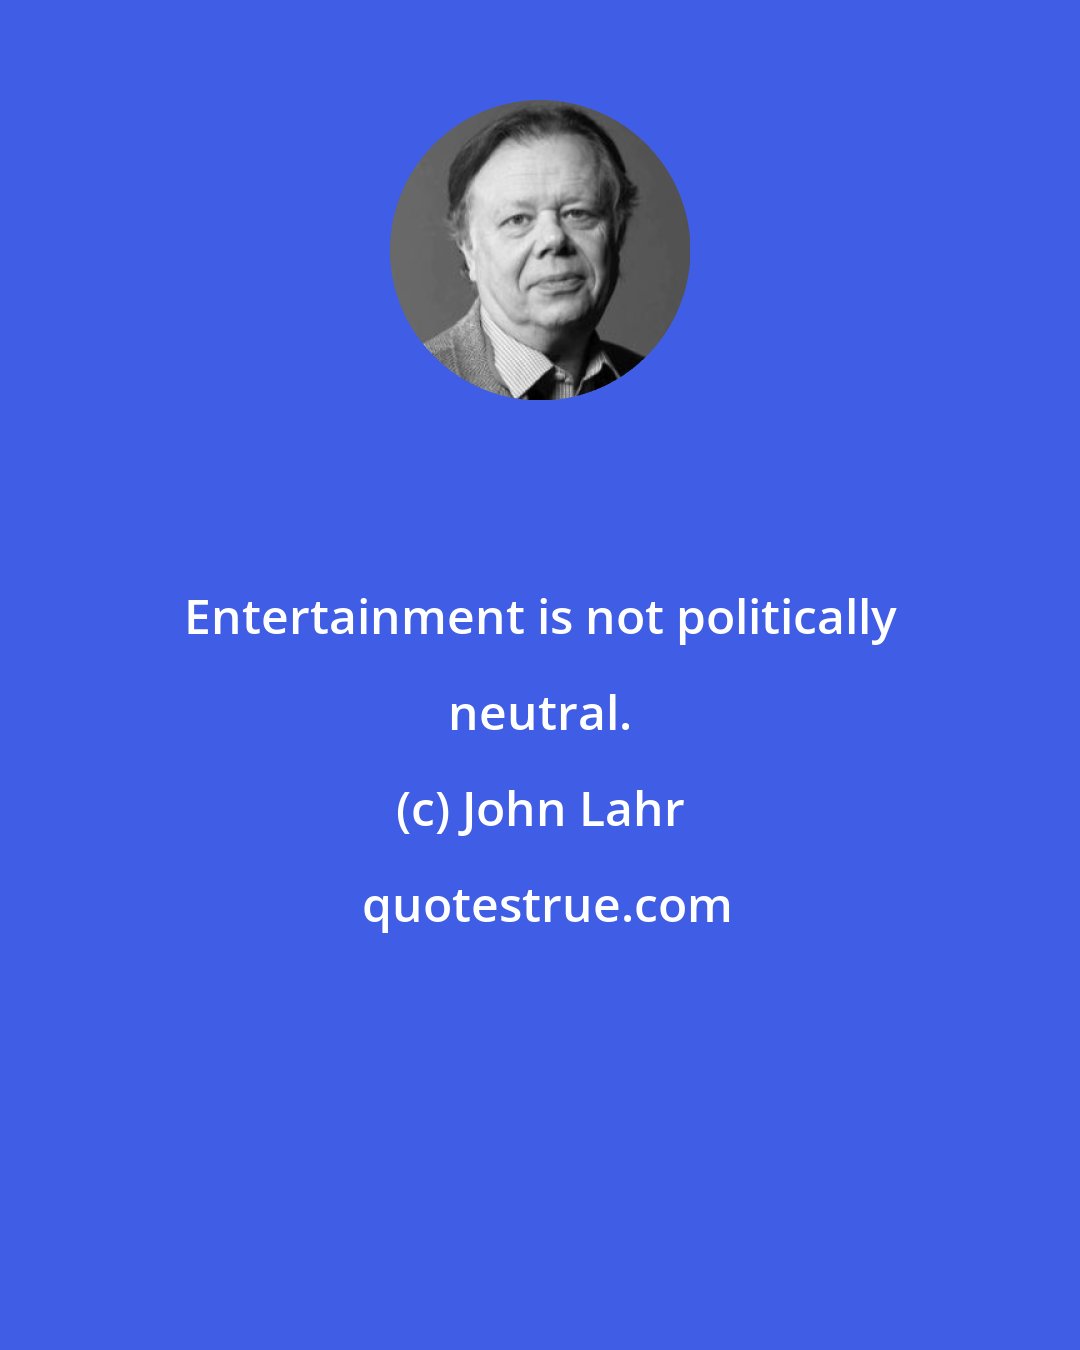 John Lahr: Entertainment is not politically neutral.